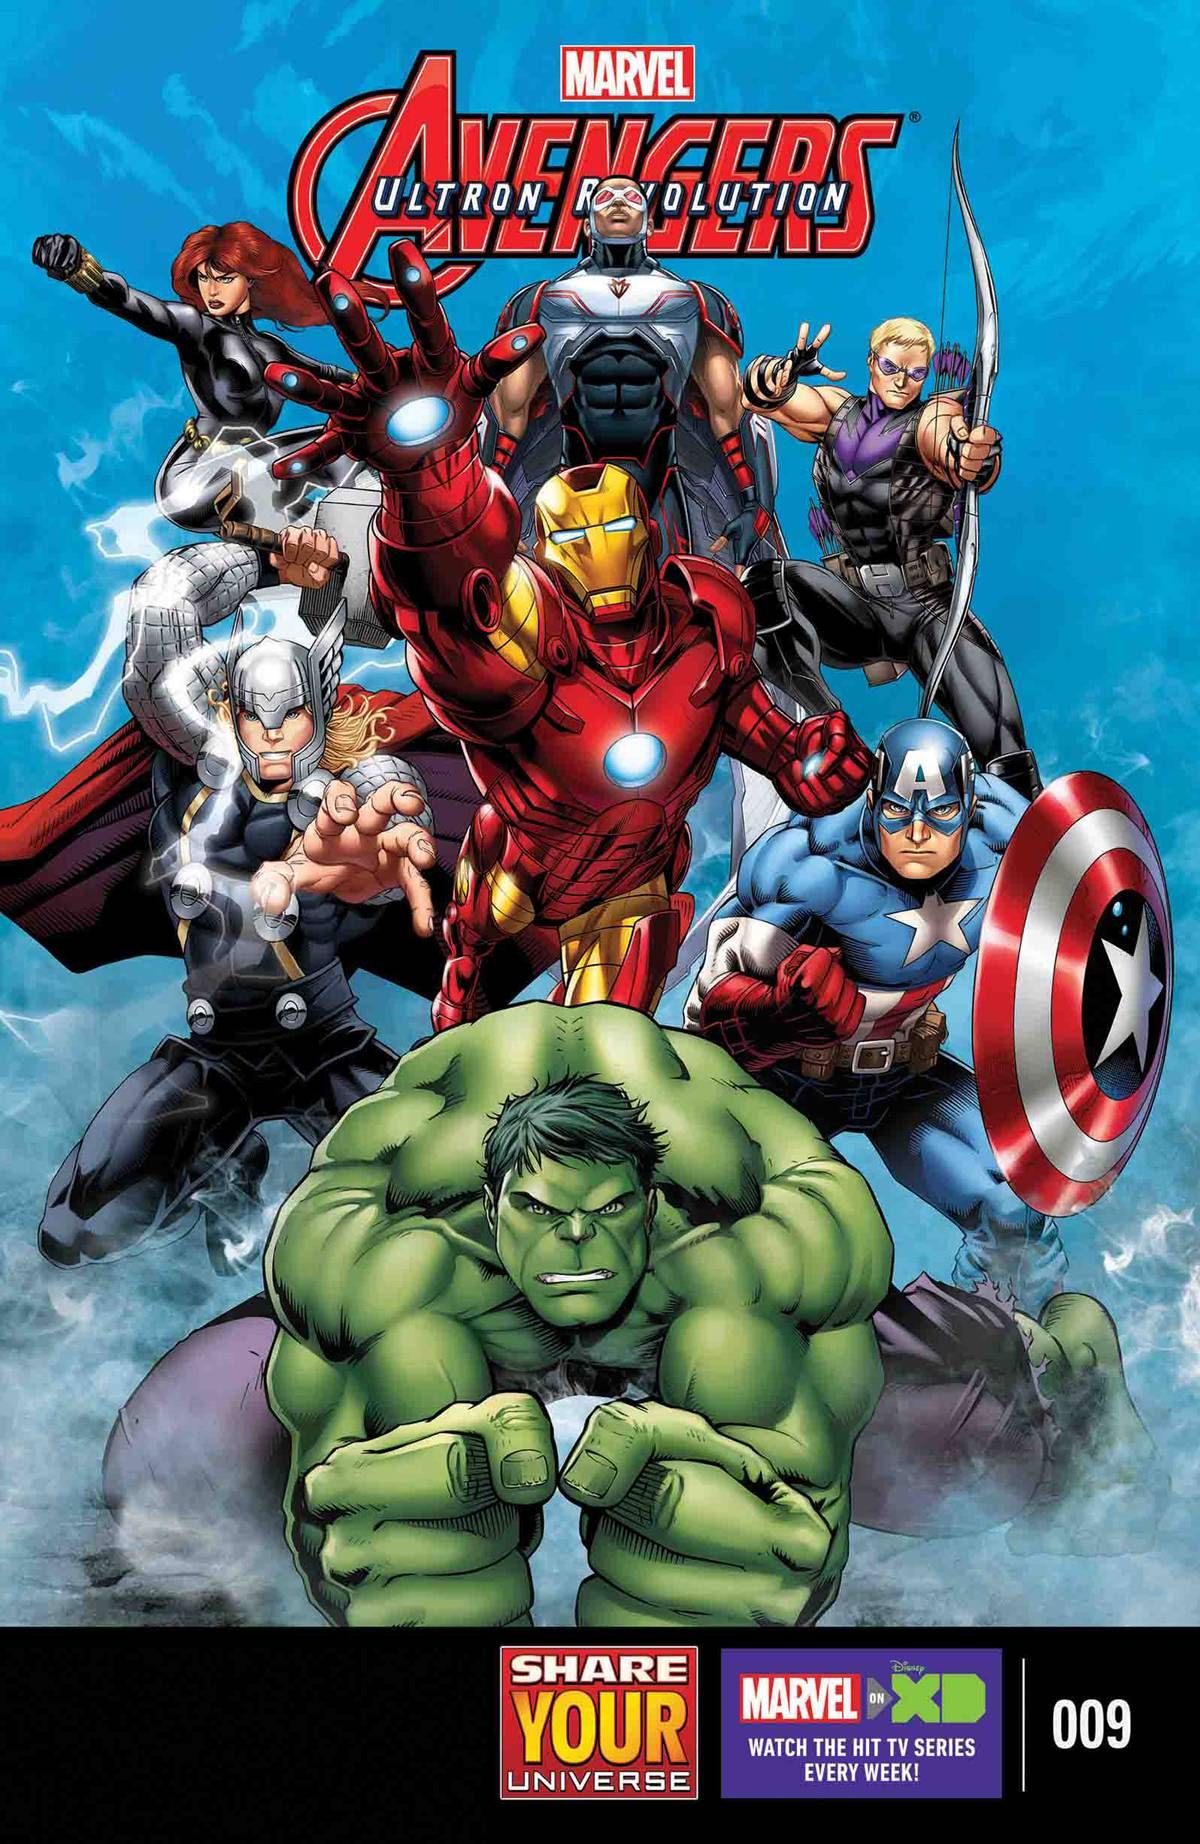 Marvel Universe Avengers: Ultron Revolution #9 Comic